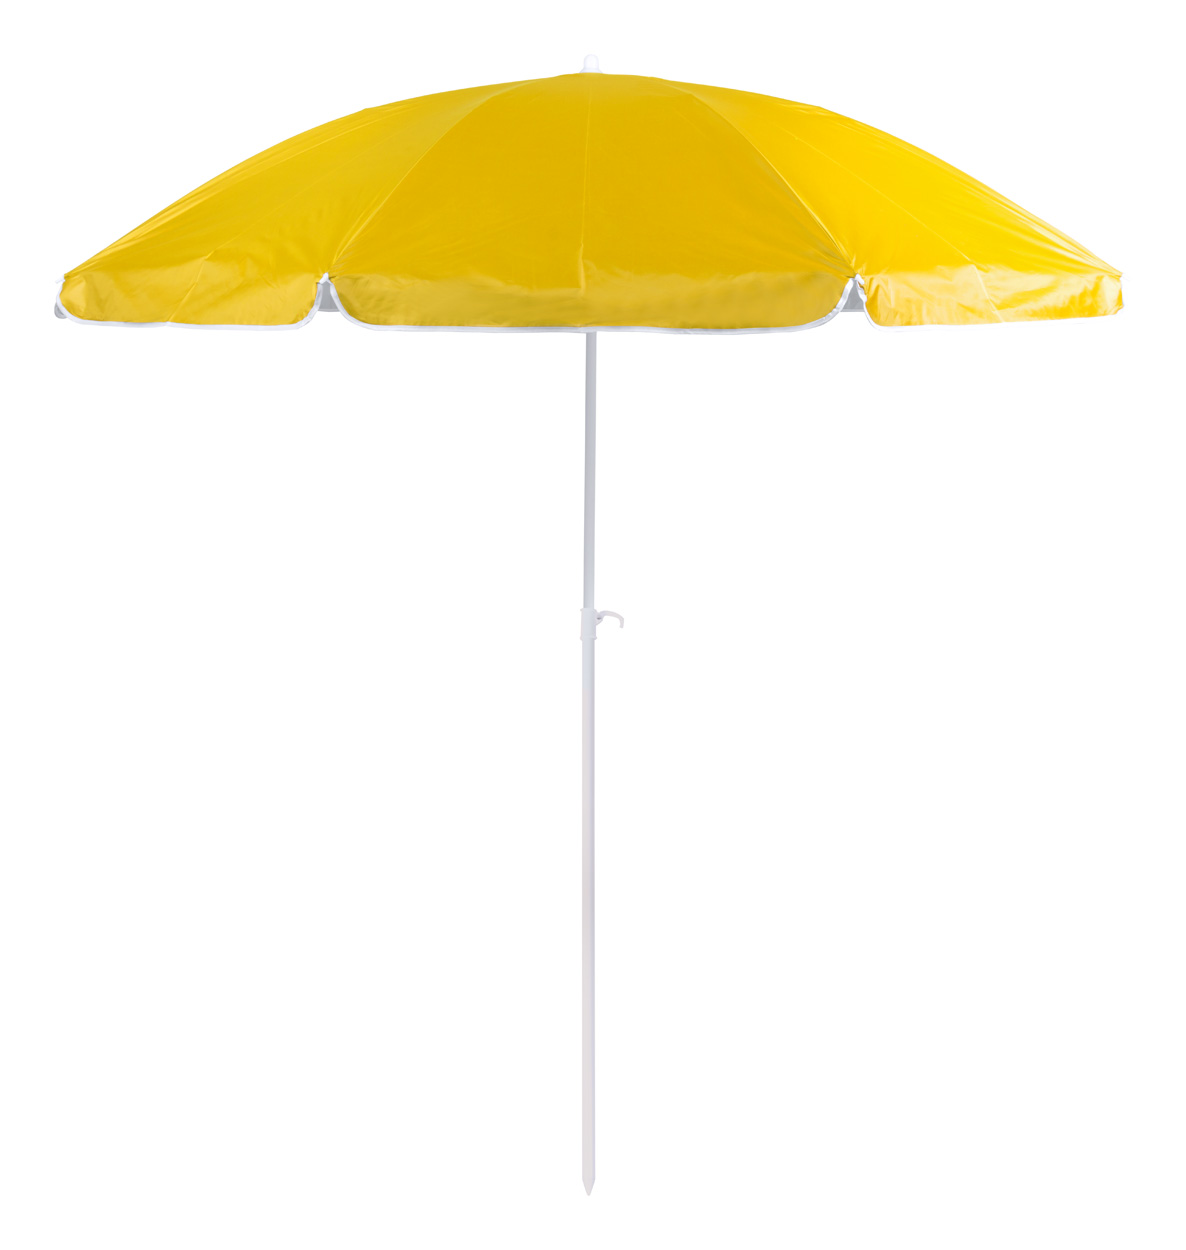 Sandok beach umbrella